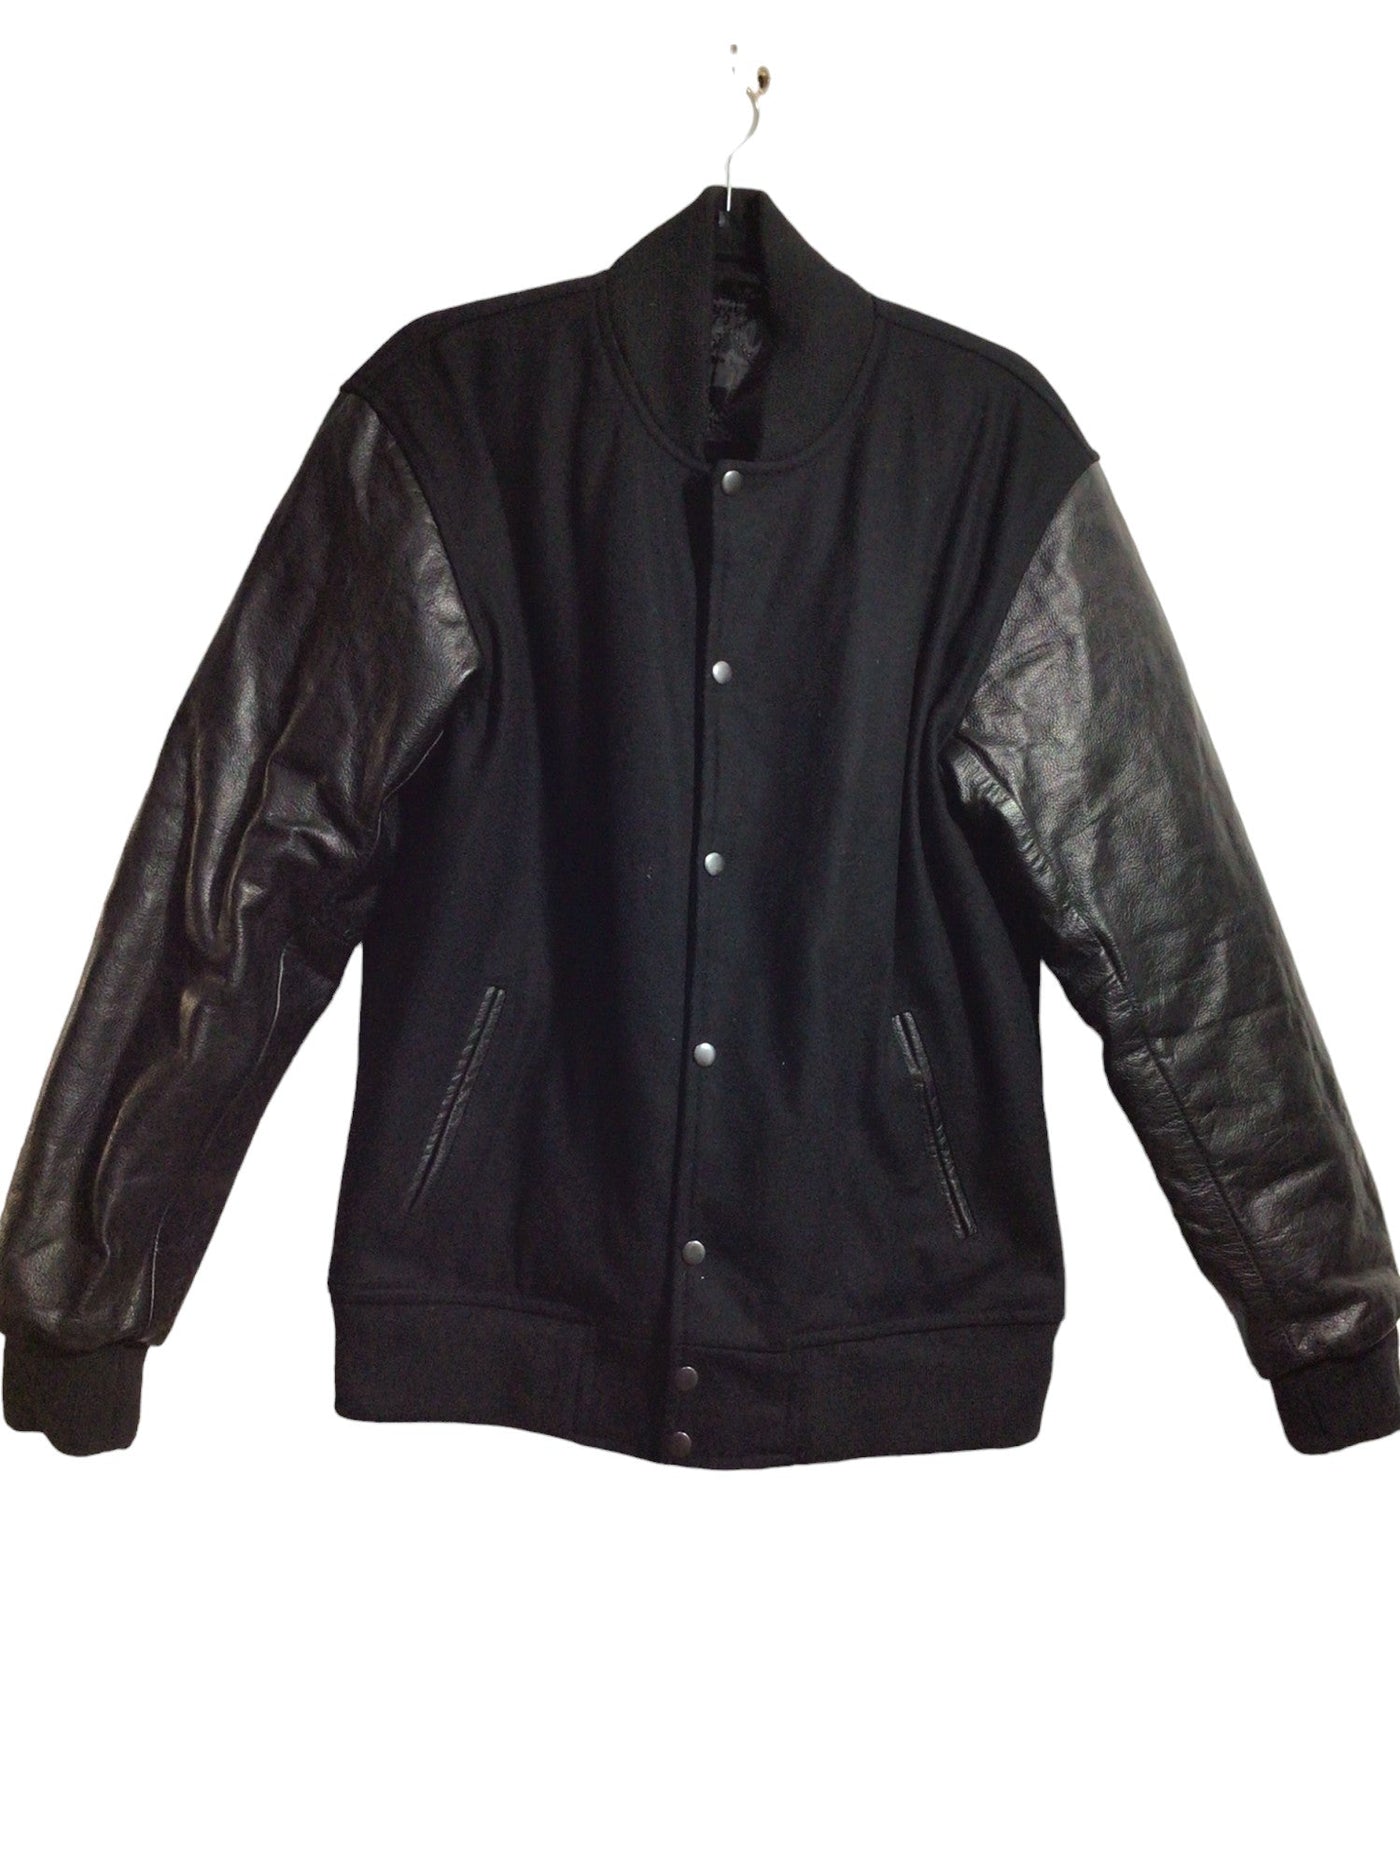 UNBRANDED Women Coats Regular fit in Black - Size M | 13.49 $ KOOP